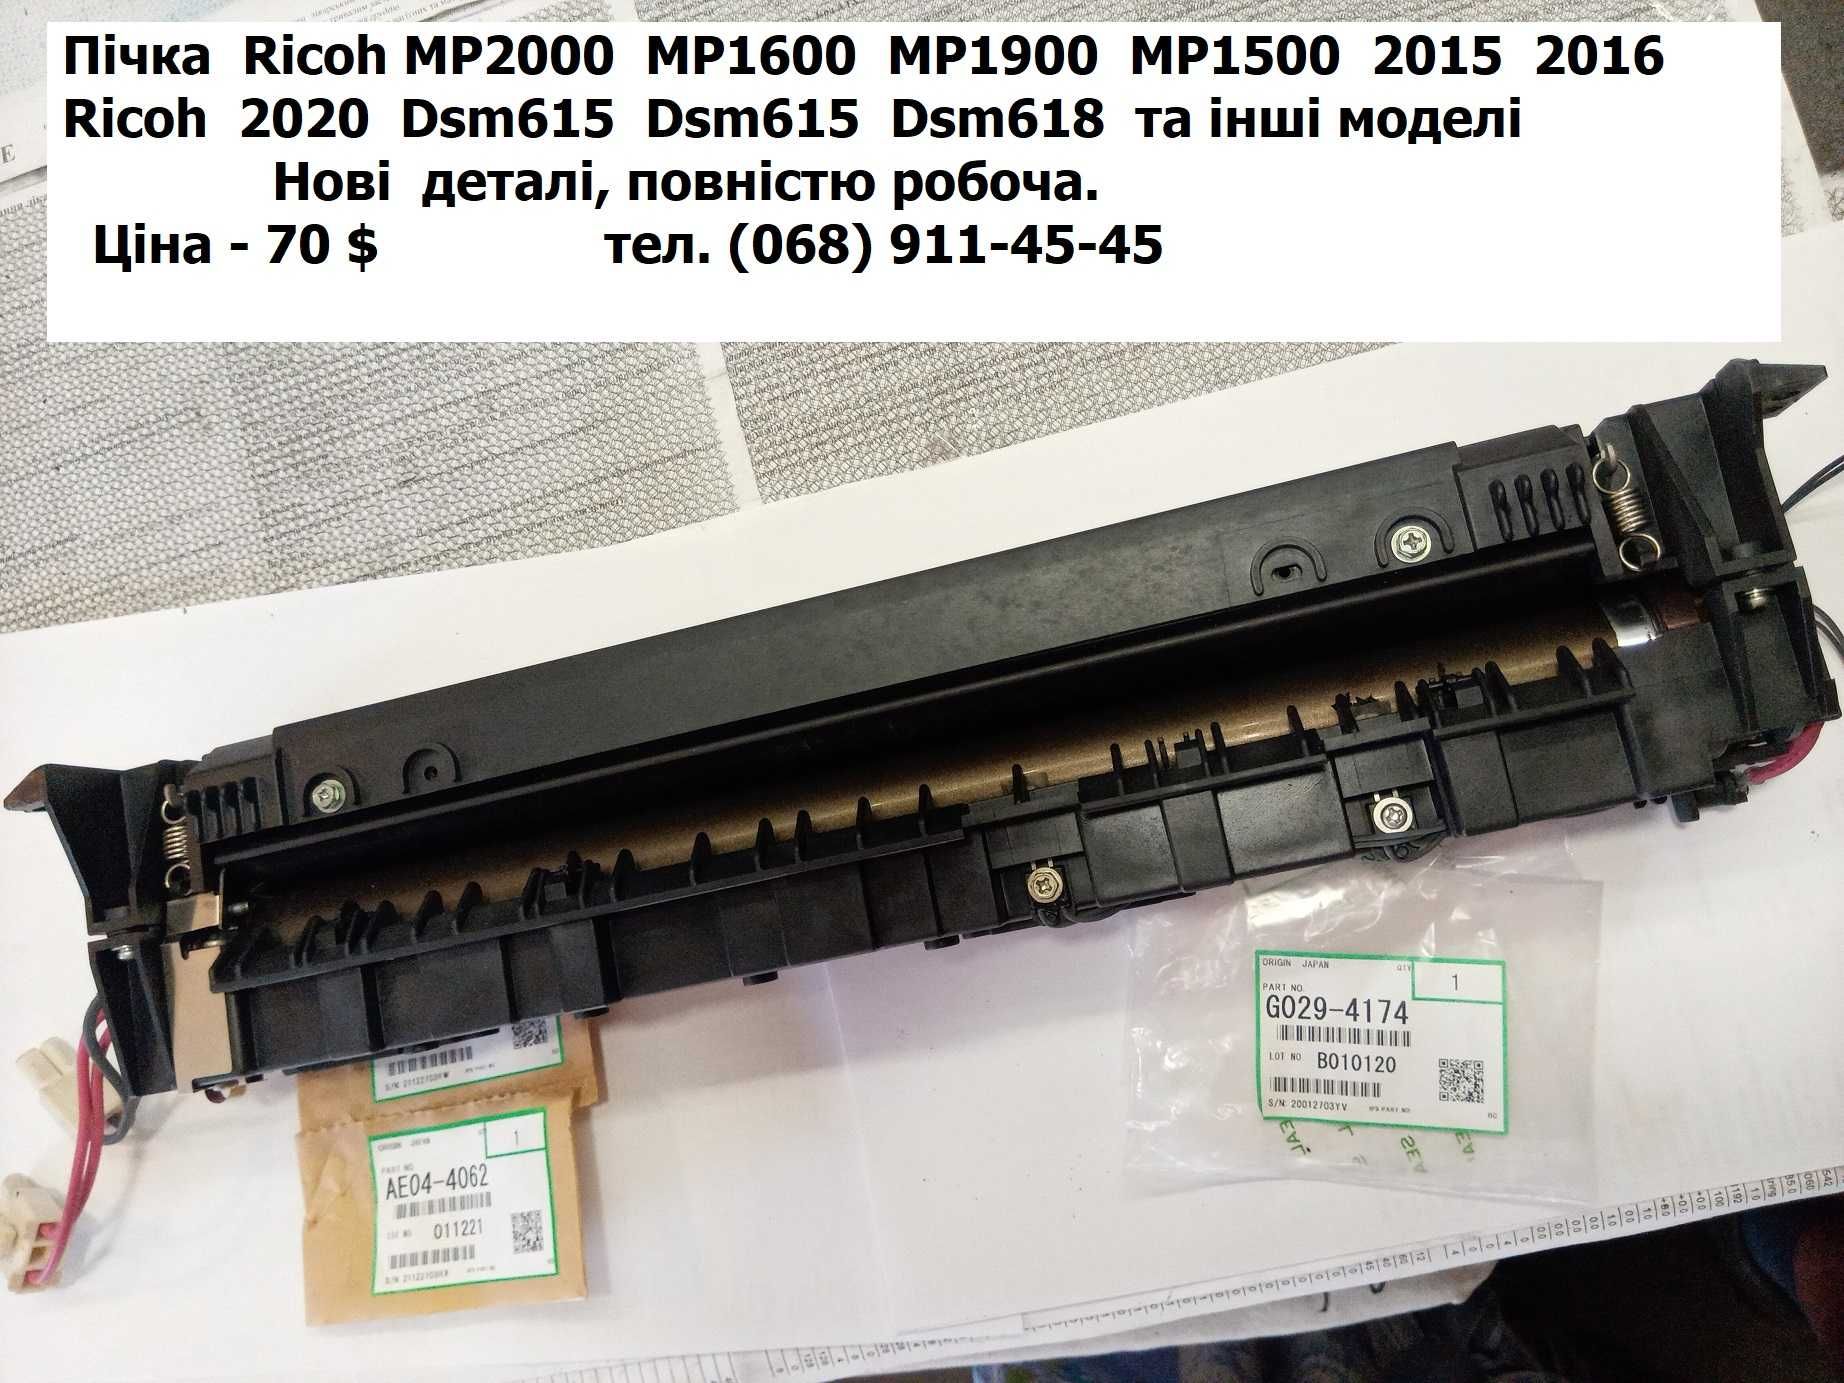 Блок нагрева печка для Ricoh MP2000 MP1500 2015 Dsm615 Dsm618